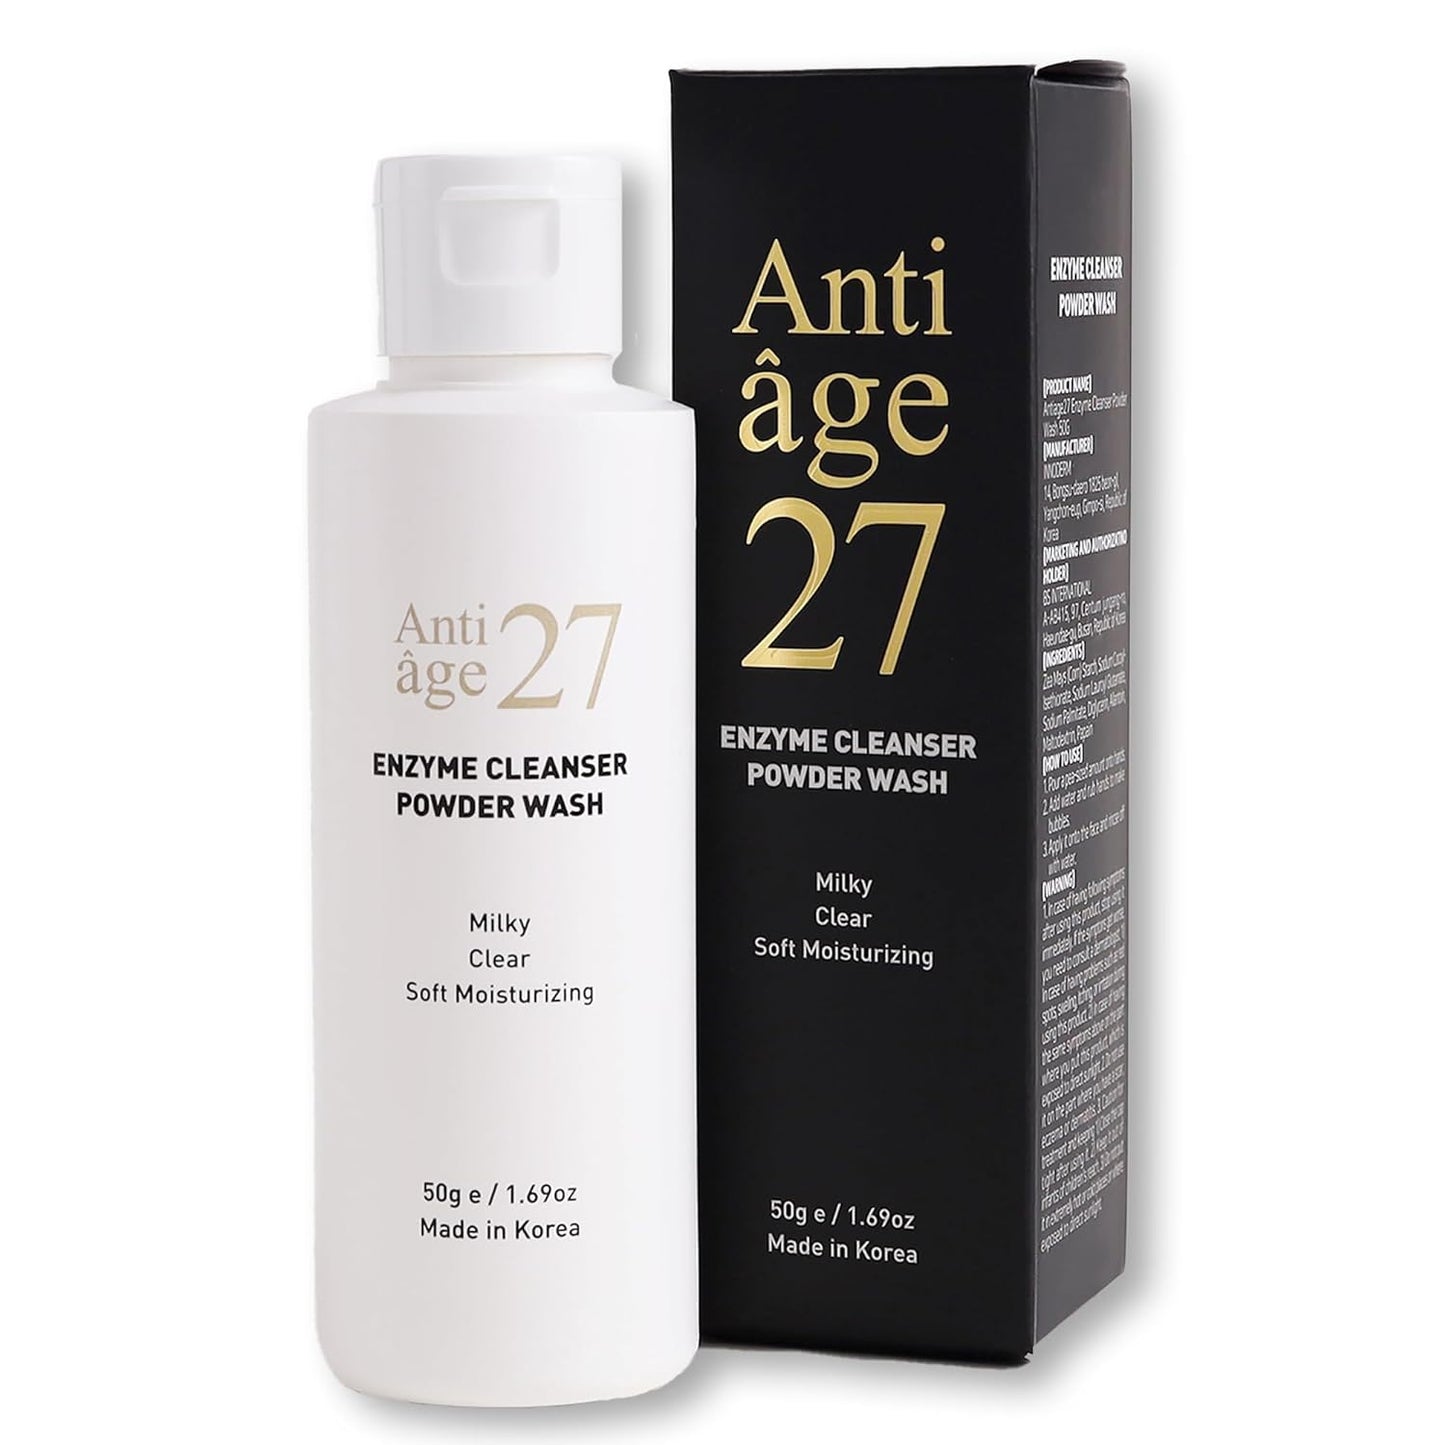 ANTIAGE27-Enzyme-Cleanser-Powder-Wash-486